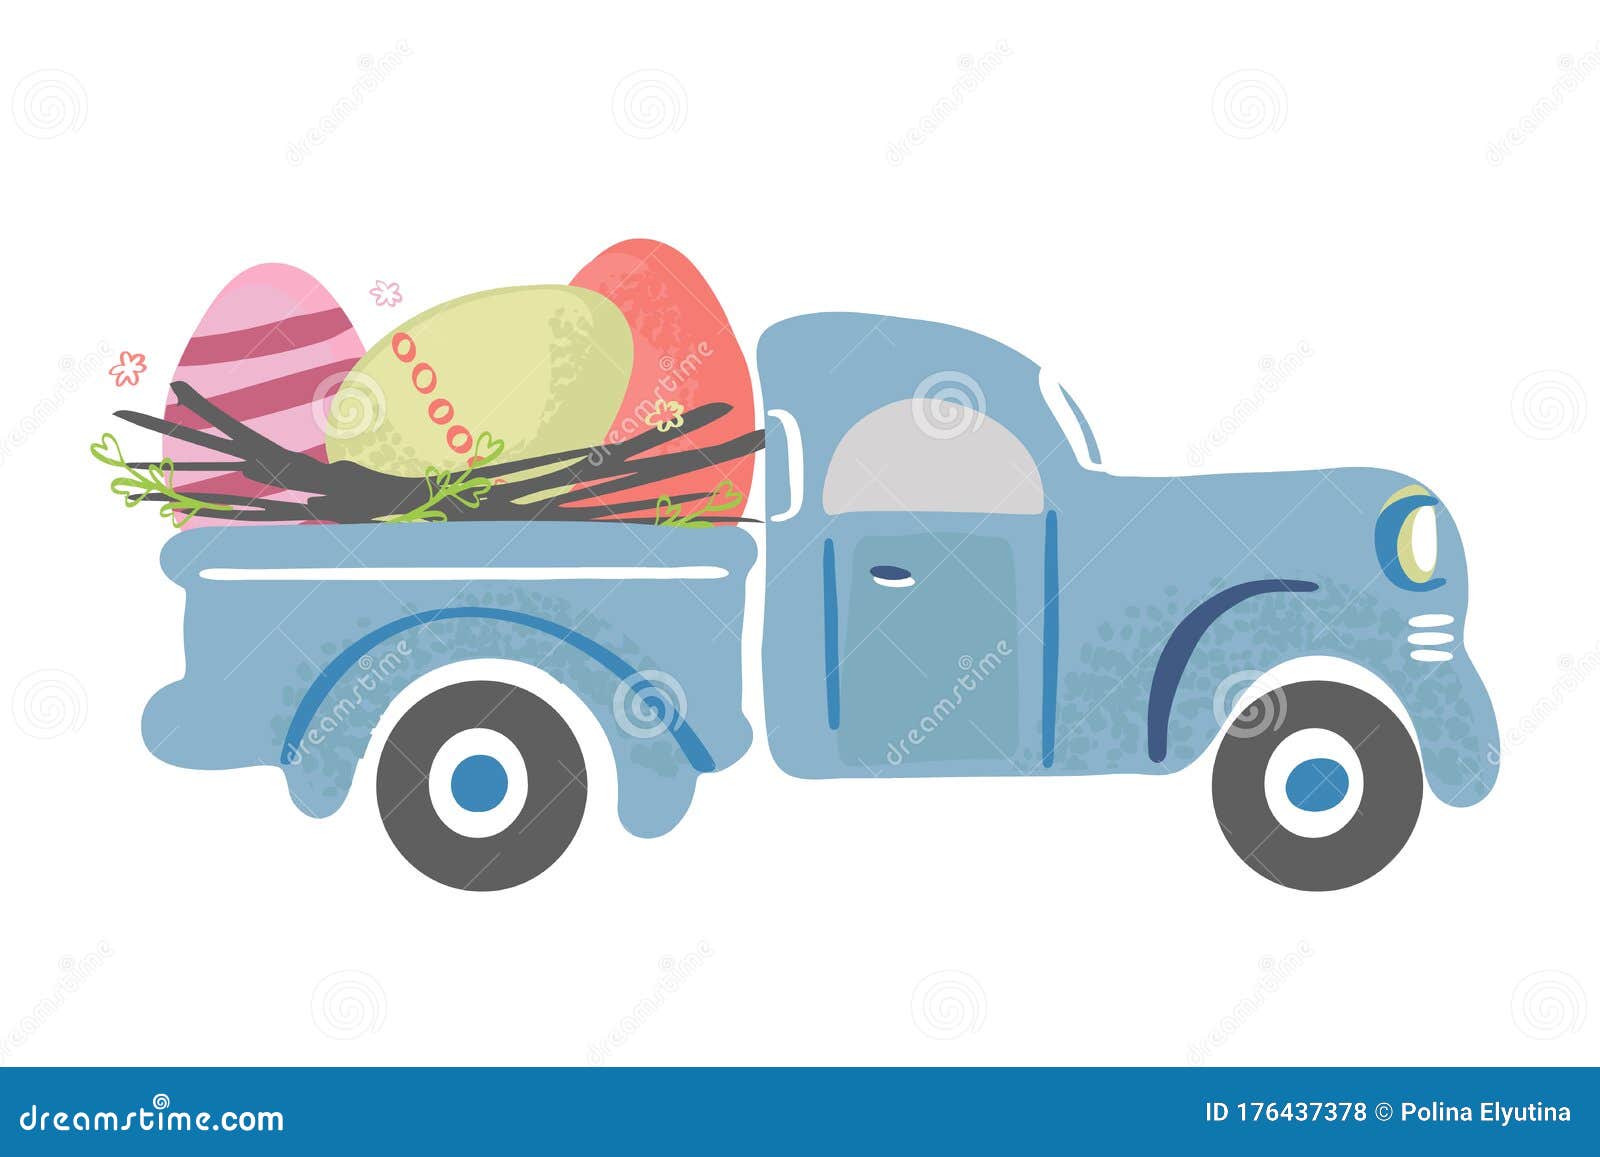 simple cute vintage truck carrying easter eggs